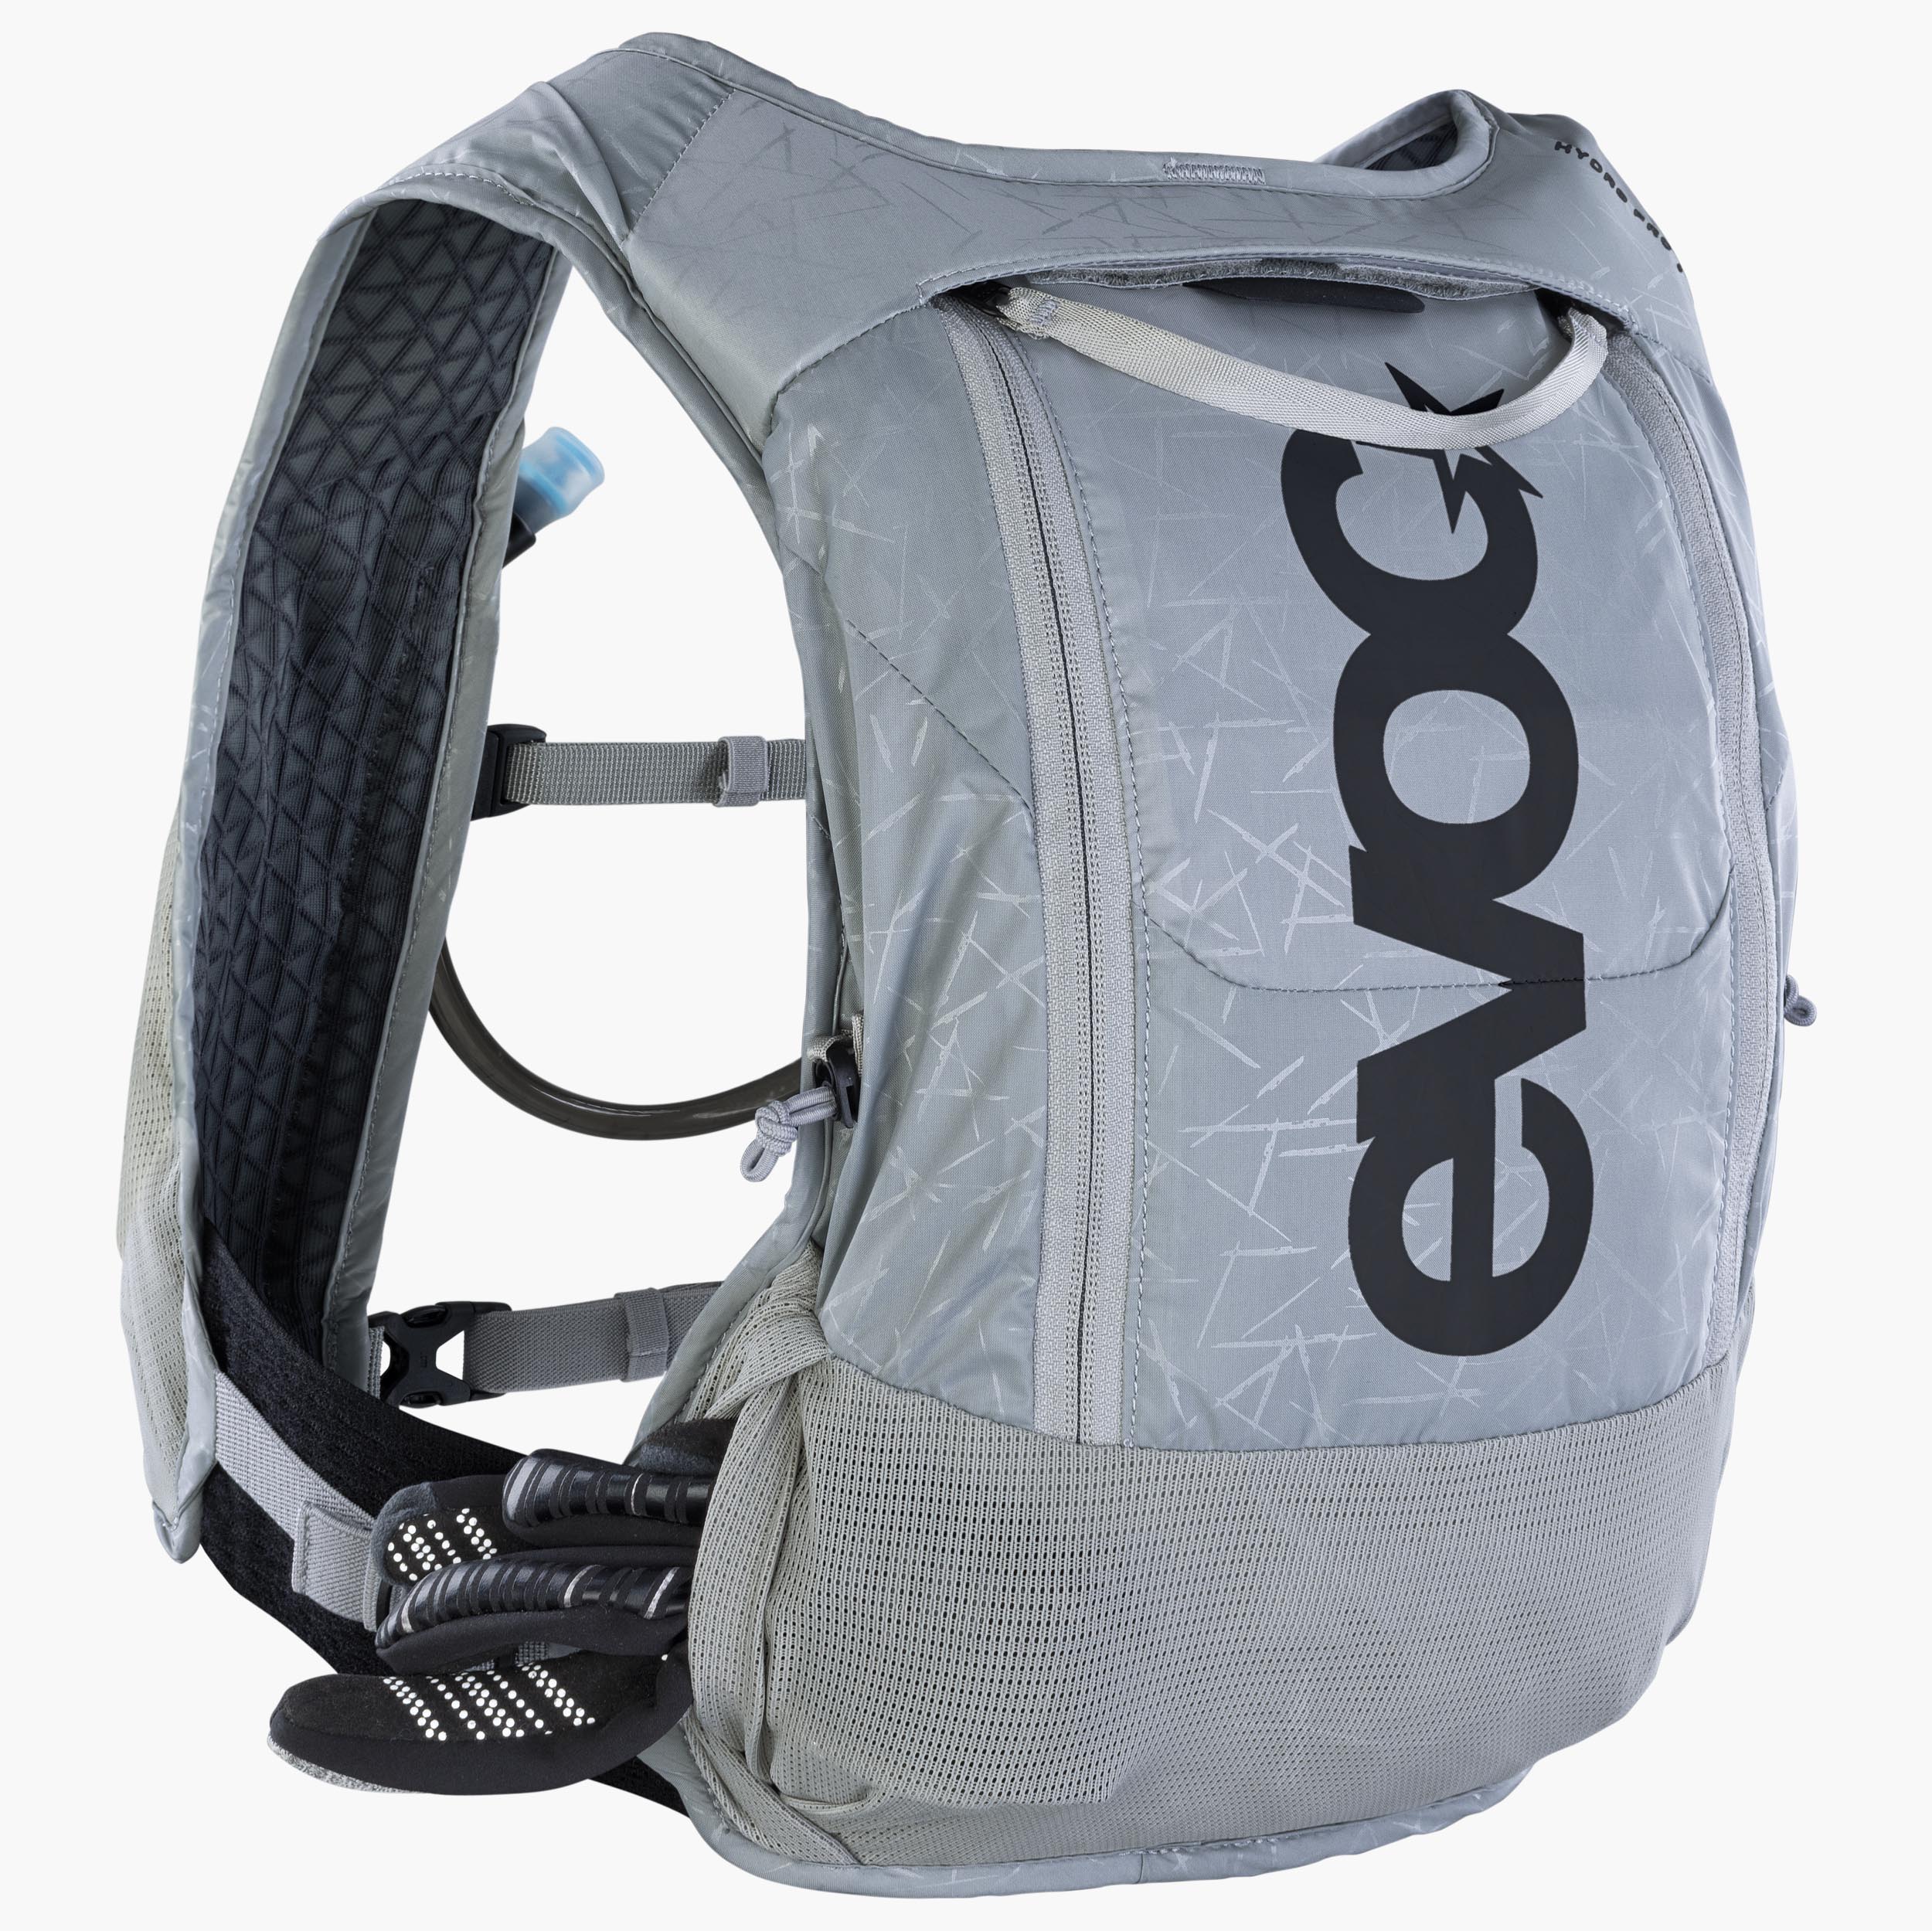 Evoc - Hydro Pro 1.5 - Hydration backpack - Steel | 1,5 l - incl. 1,5 l  Hydration Bladder